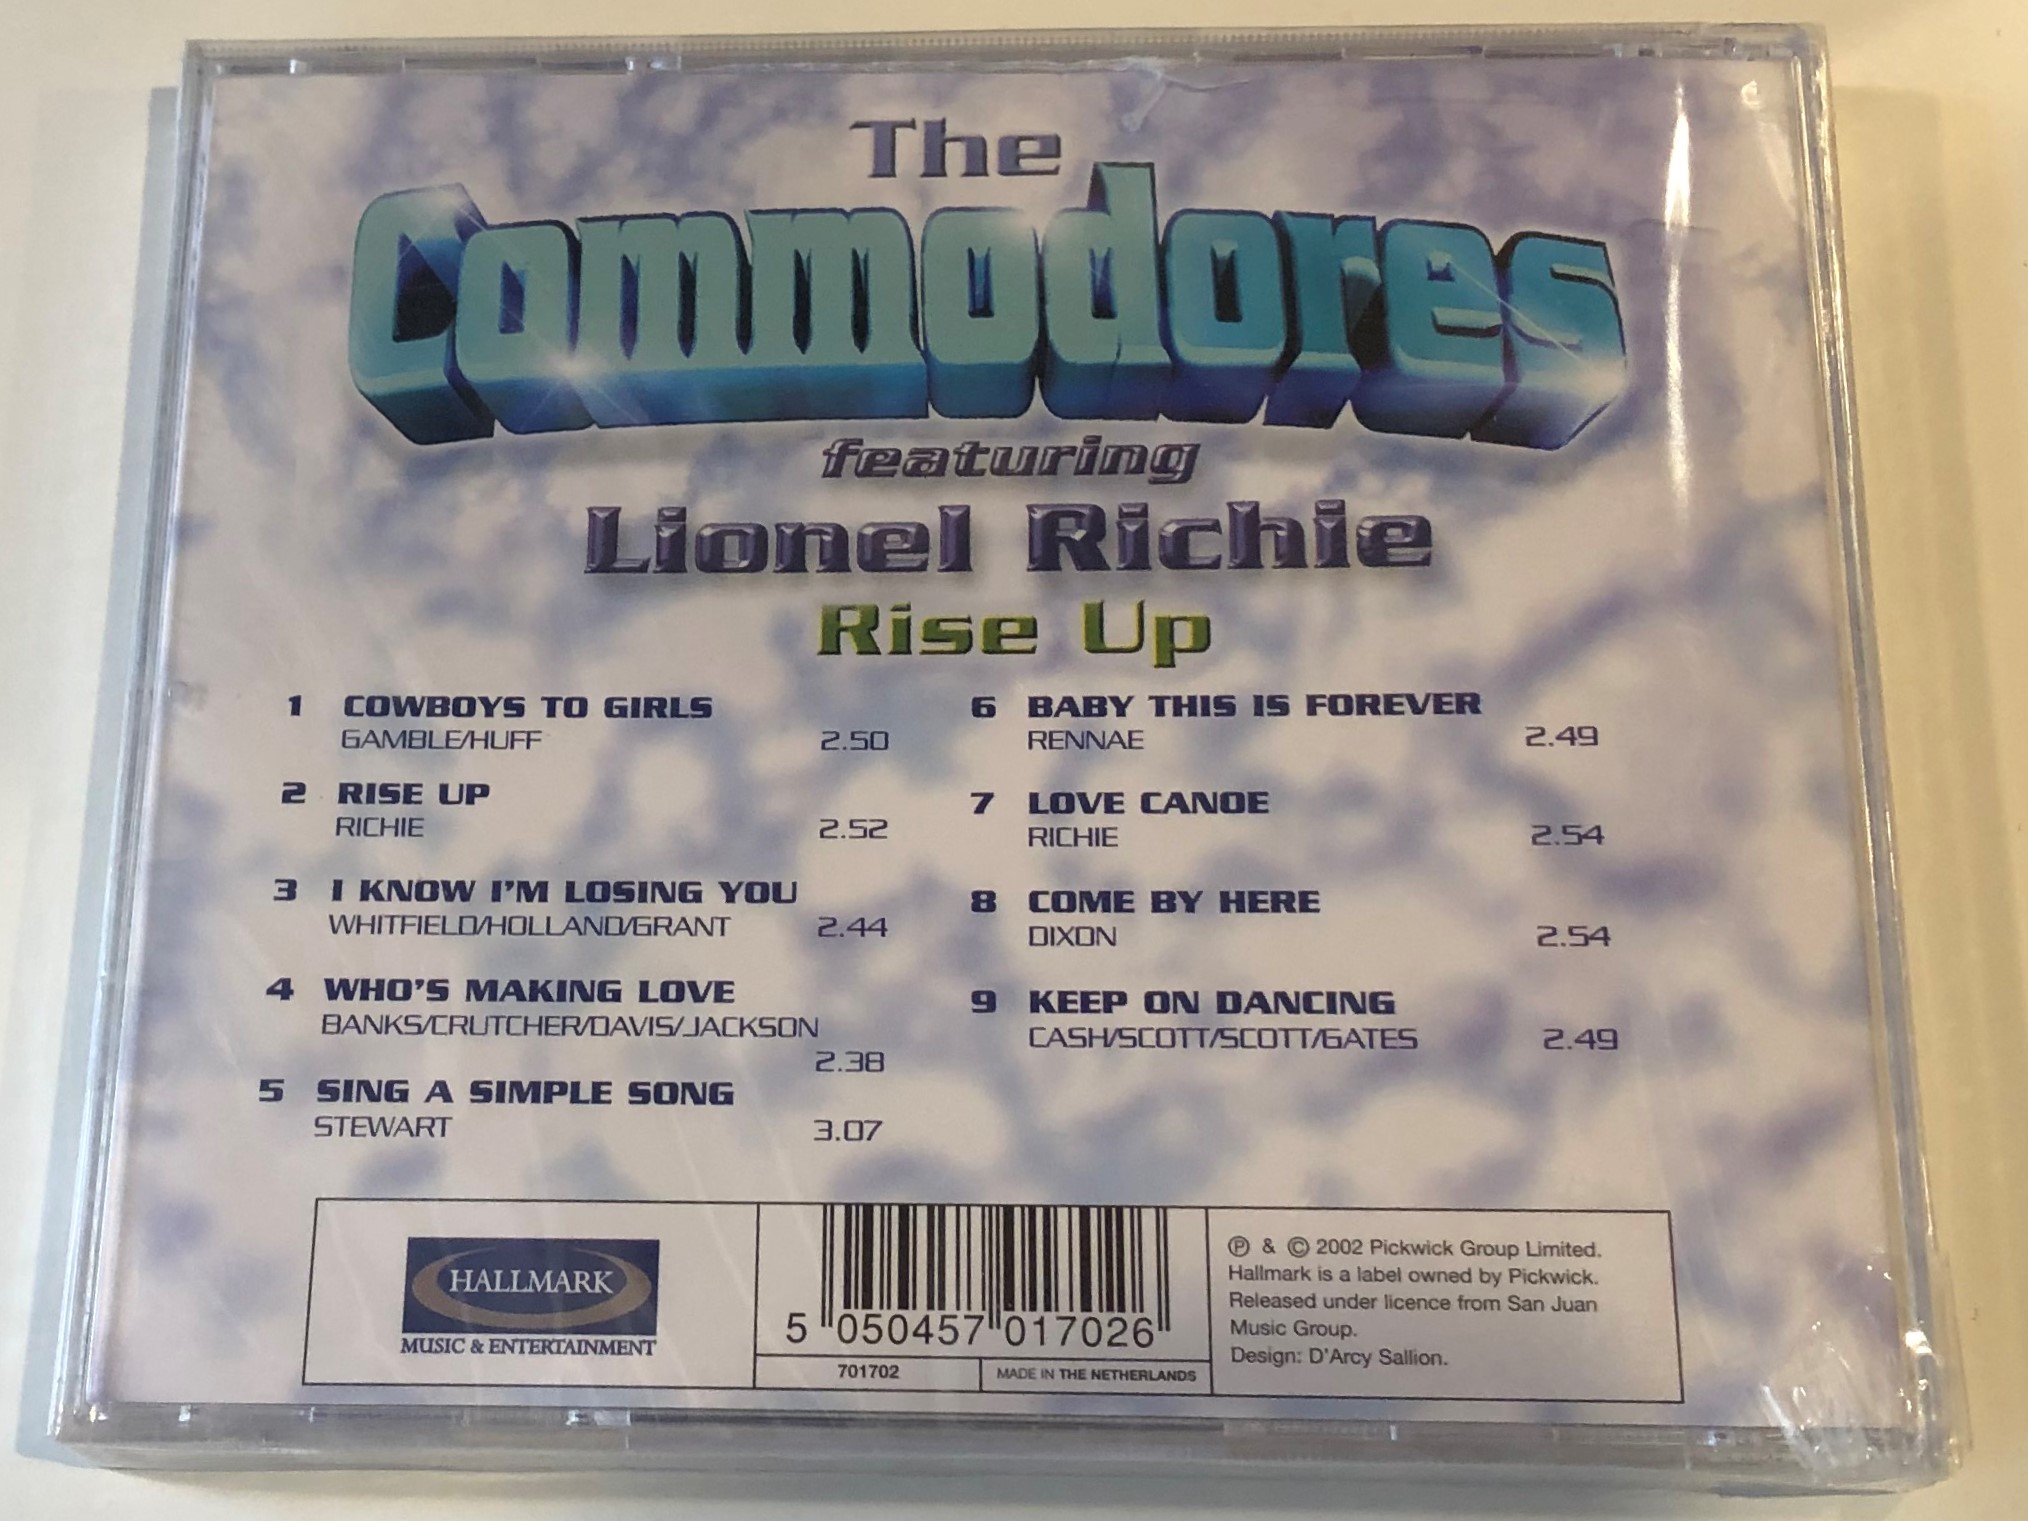 the-commodores-featuring-lionel-richie-rise-up-hallmark-music-entertainment-audio-cd-2002-701702-2-.jpg